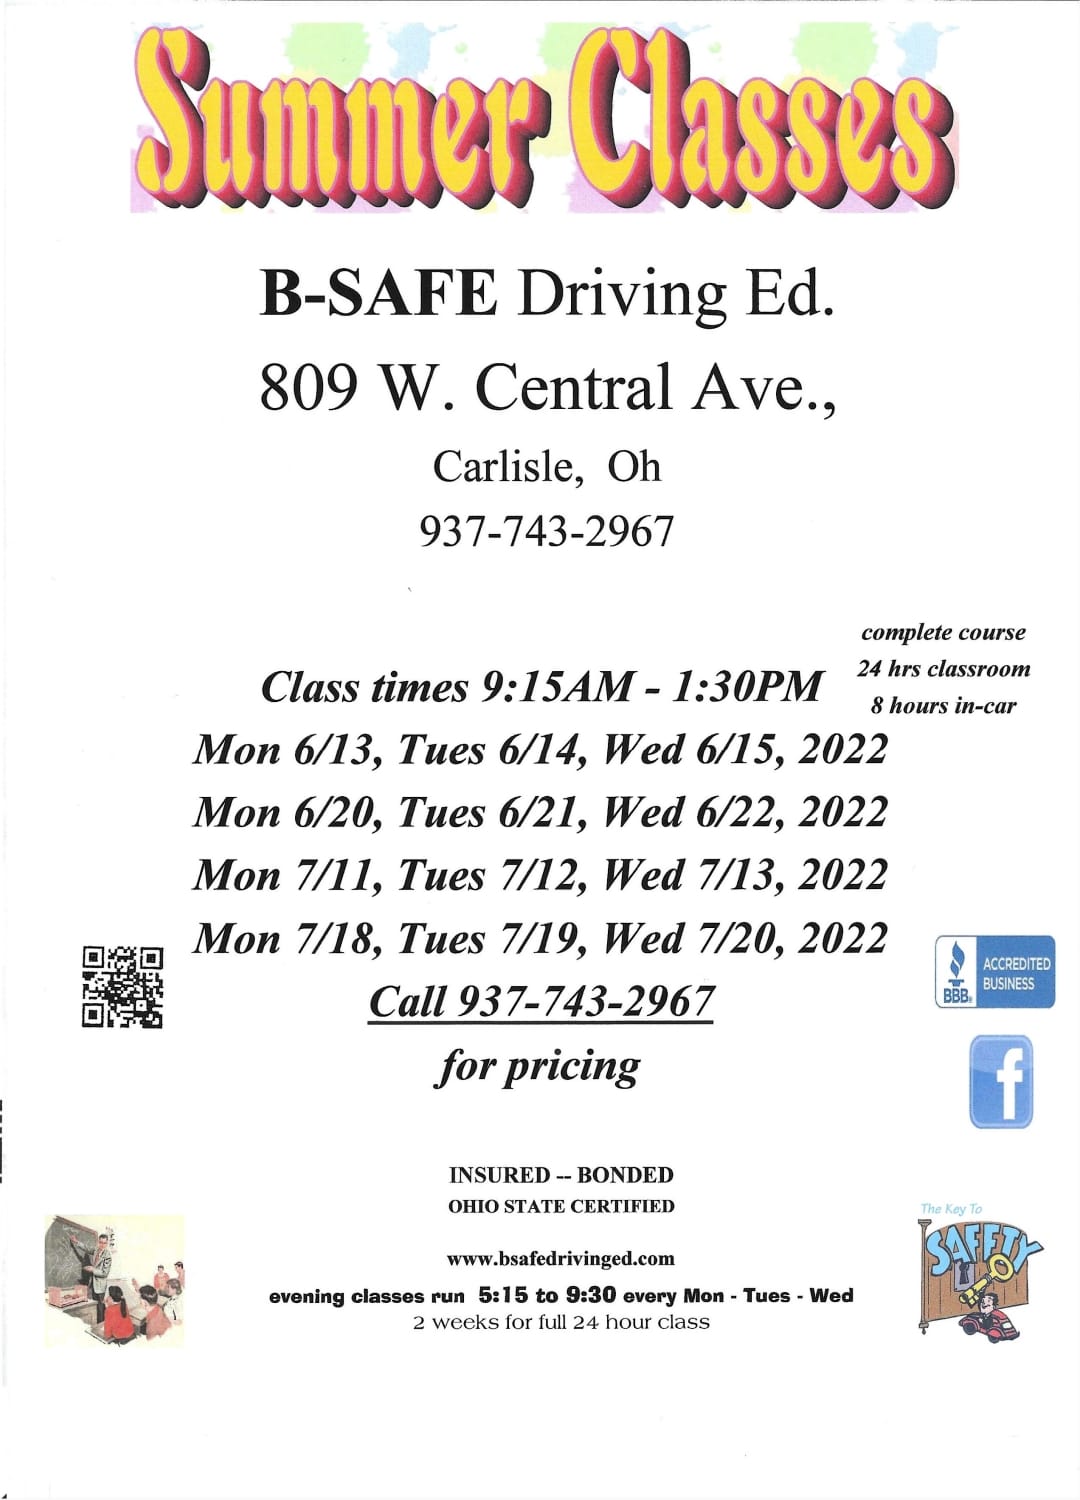 B-SAFE Driving Education LLC 8 W State St, Trenton Ohio 45067